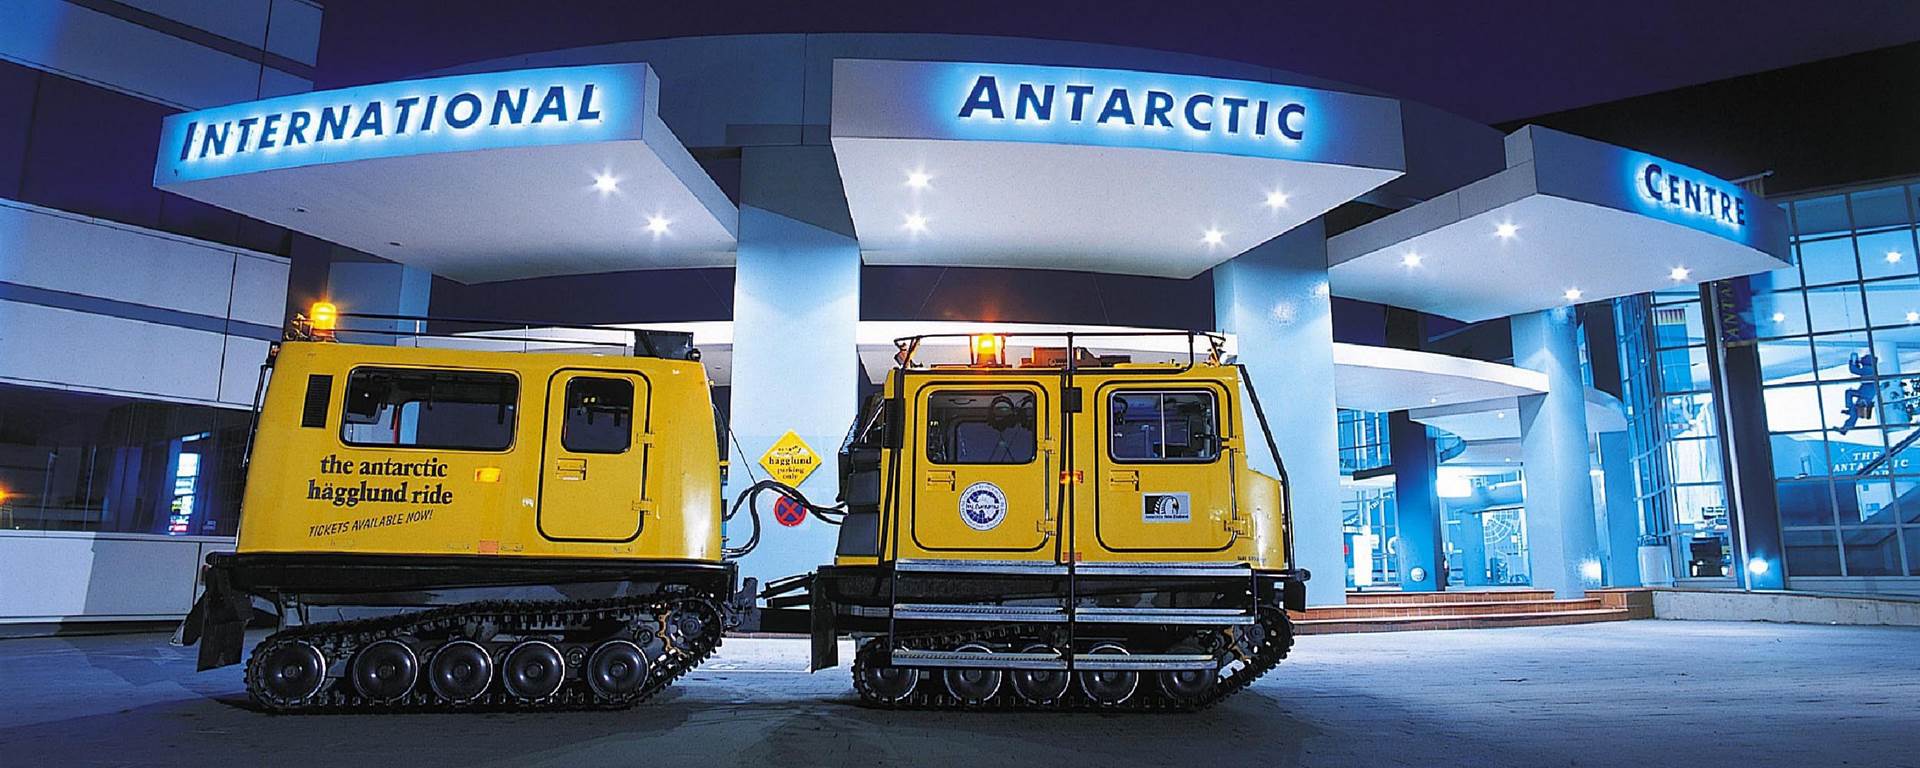 Exterior of the International Antarctic Centre